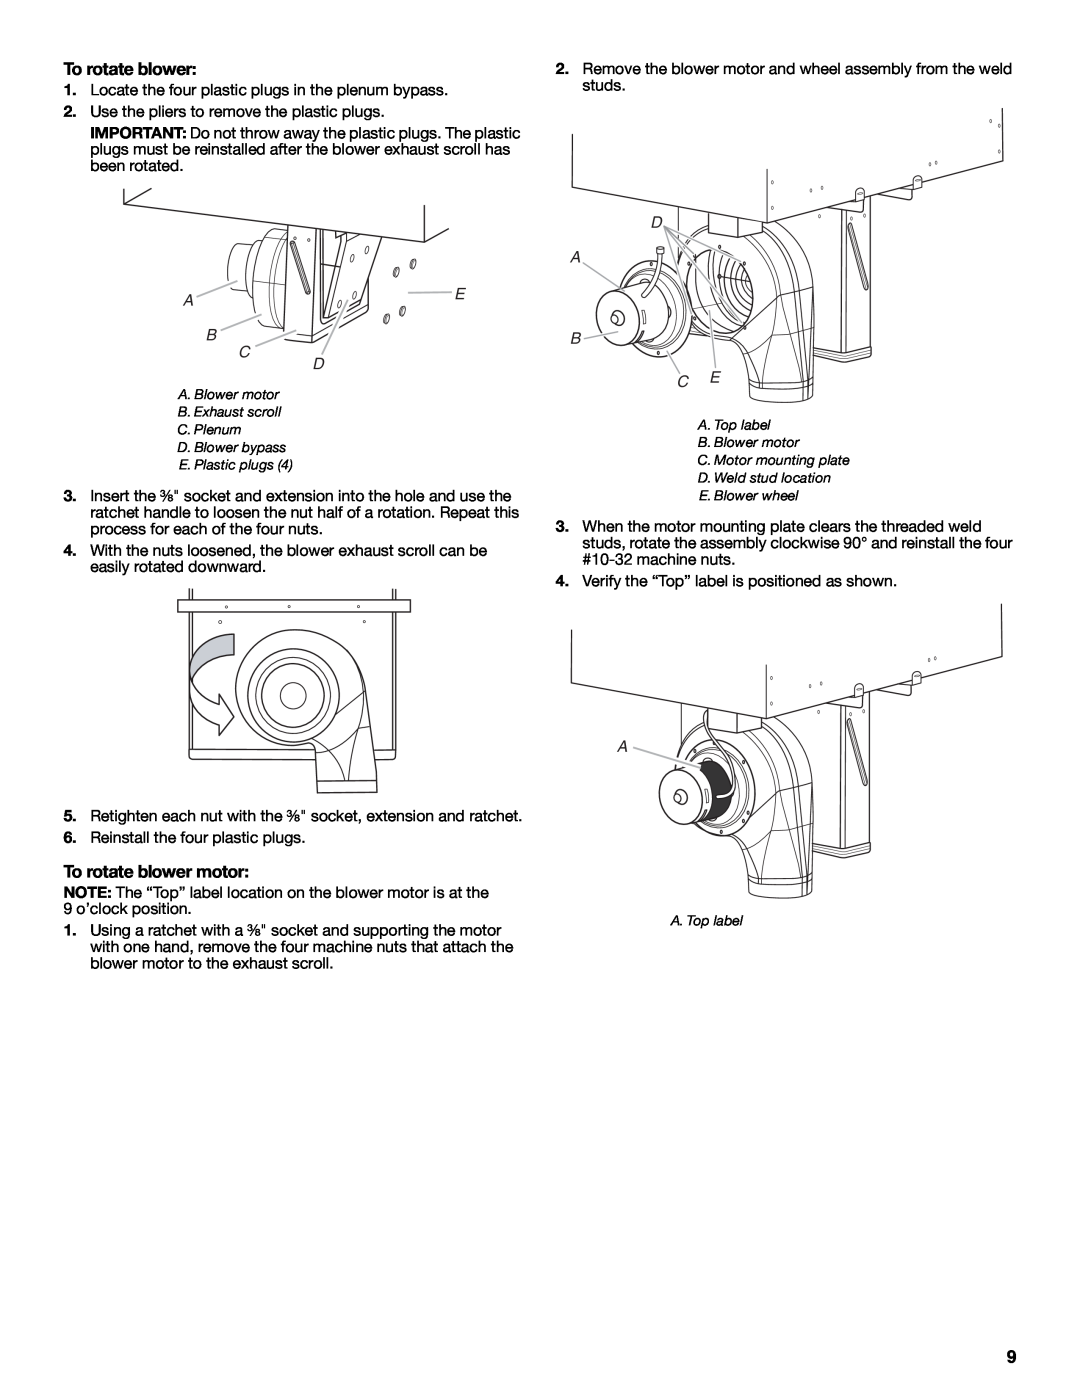 Jenn-Air W10197059B installation instructions To rotate blower motor, A E, D A B C E 